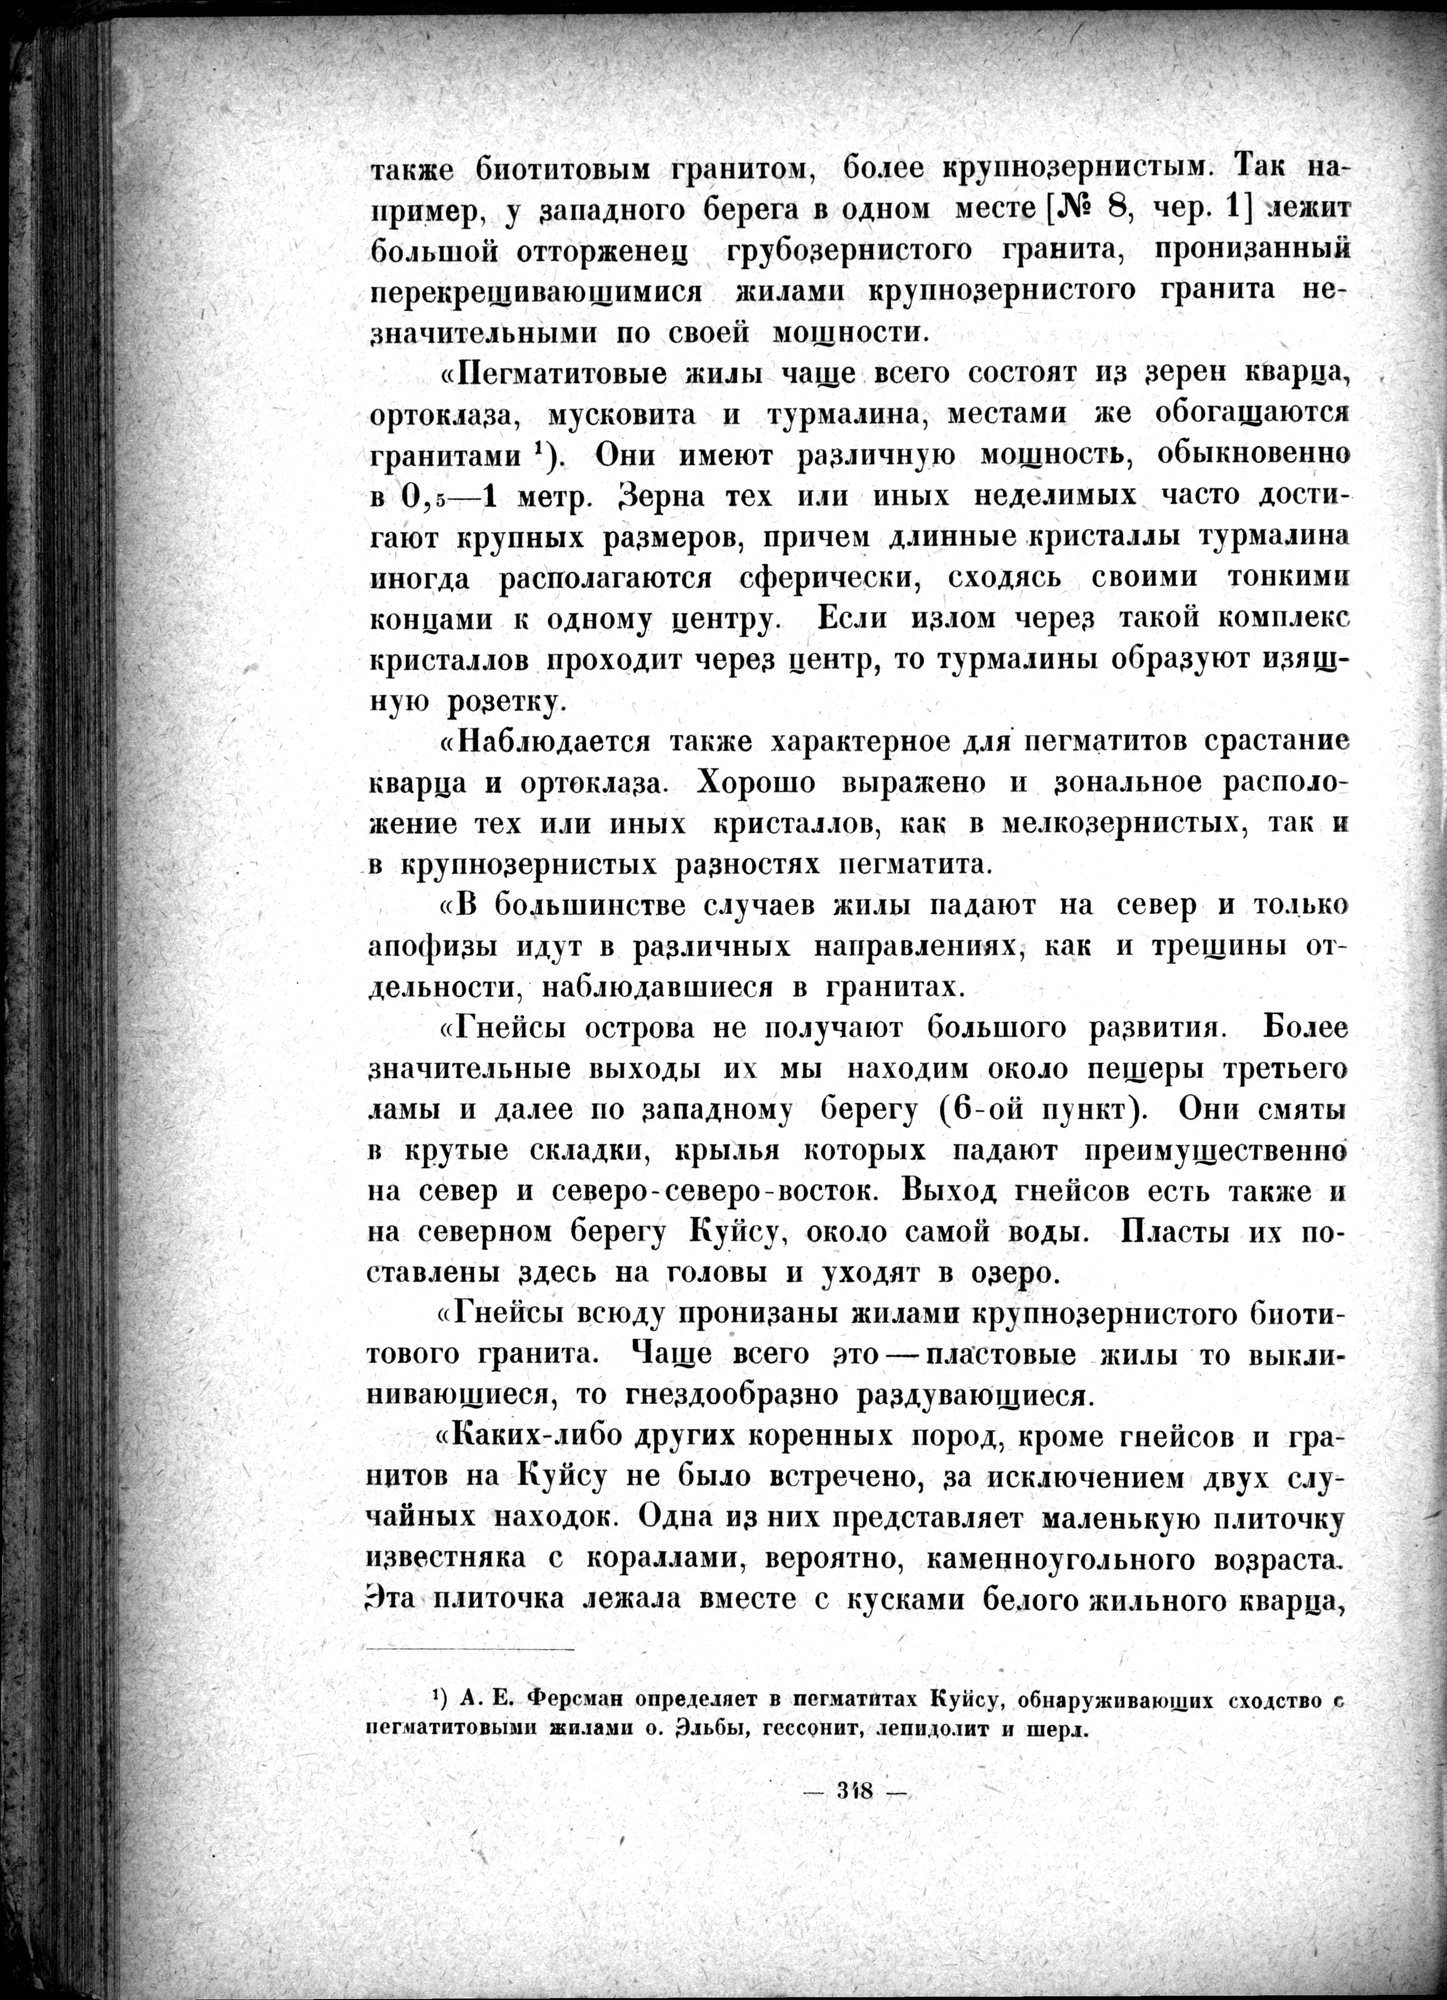 Mongoliya i Amdo i mertby gorod Khara-Khoto : vol.1 / Page 398 (Grayscale High Resolution Image)